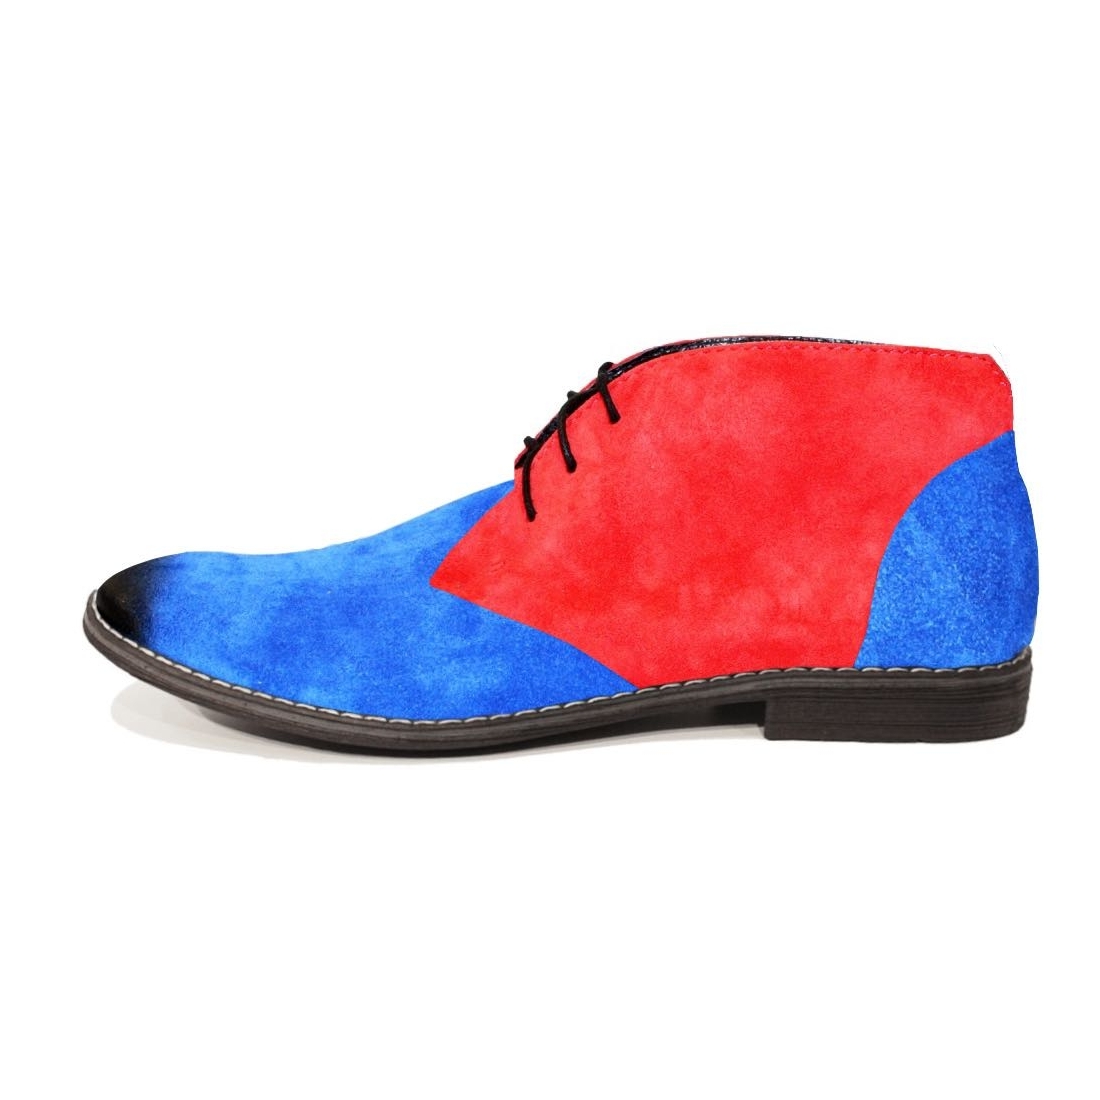 Modello Sterrer - チャッカブーツ - Handmade Colorful Italian Leather Shoes